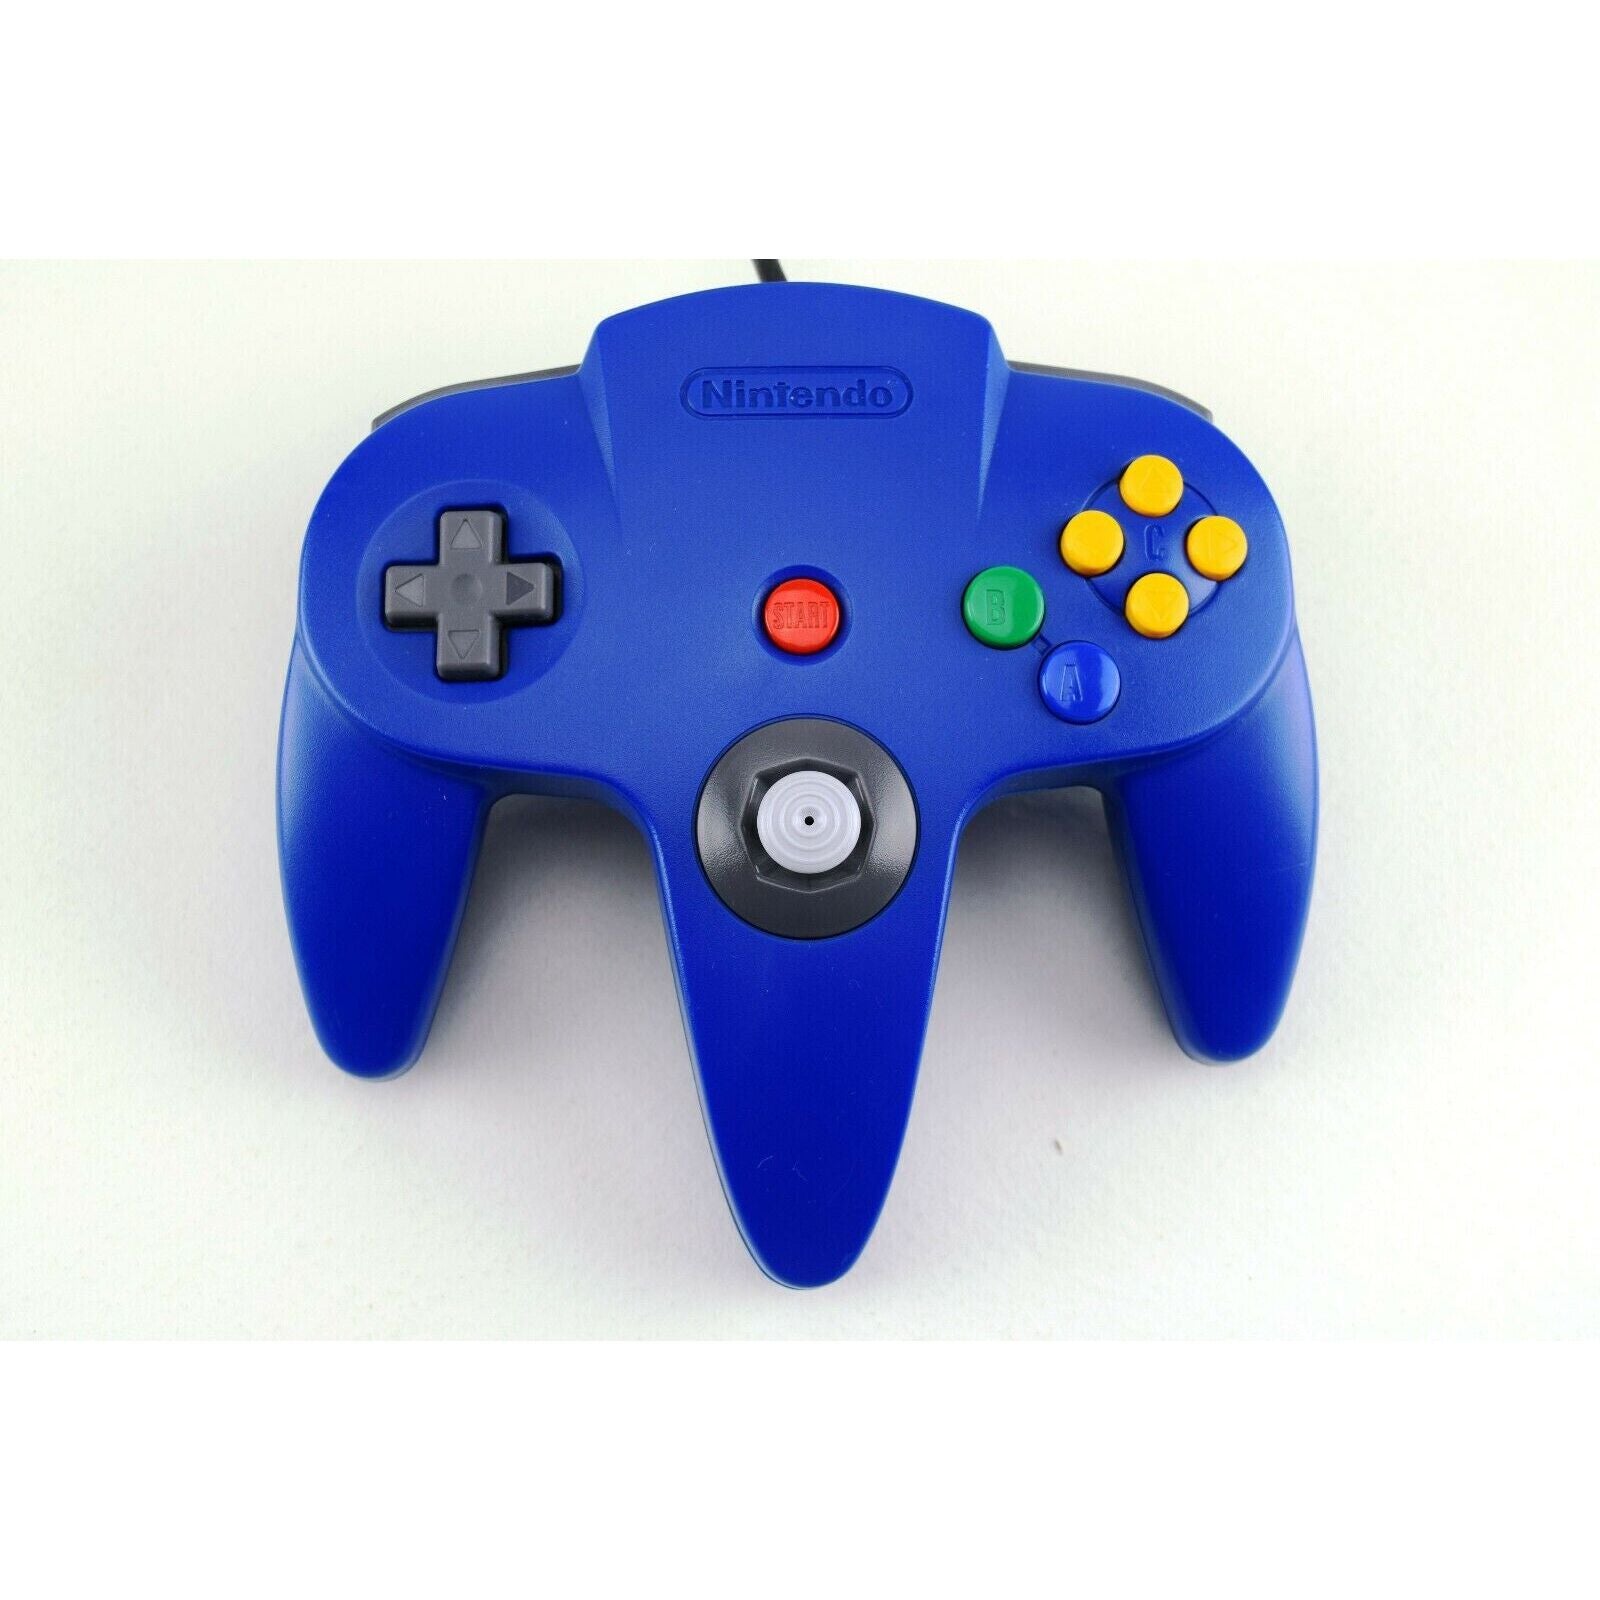 Branded Nintendo 64 Controller (Blue / Used)